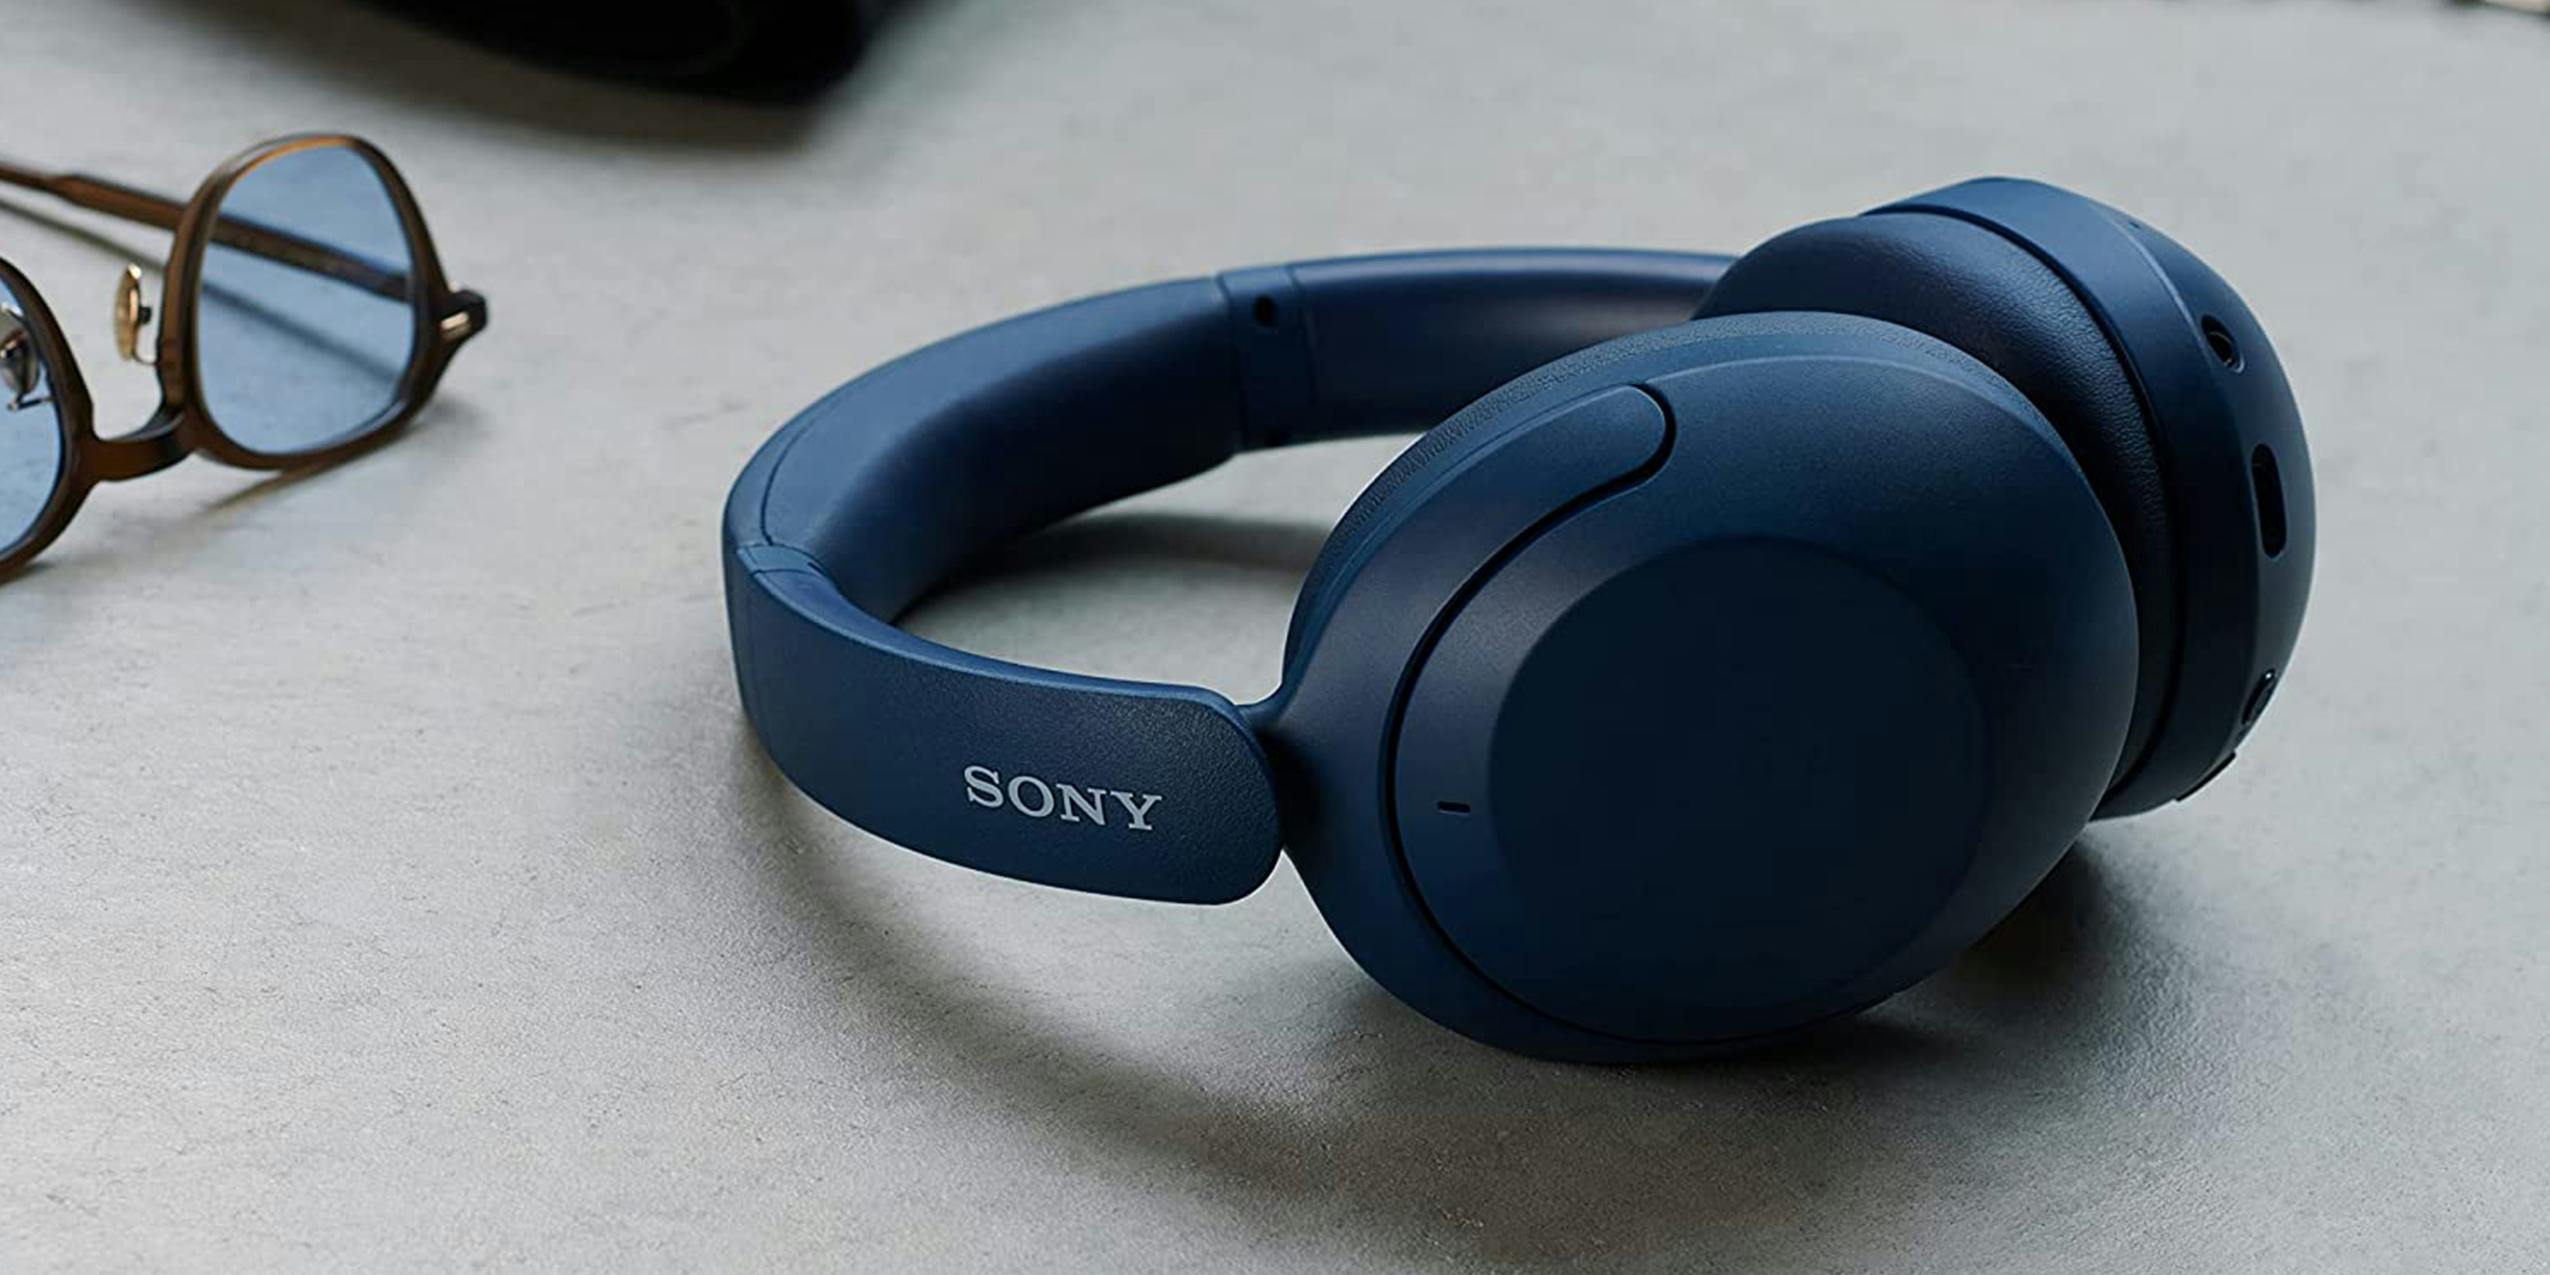 A pair of blue Sony Noise-Canceling Headphones on a desk.